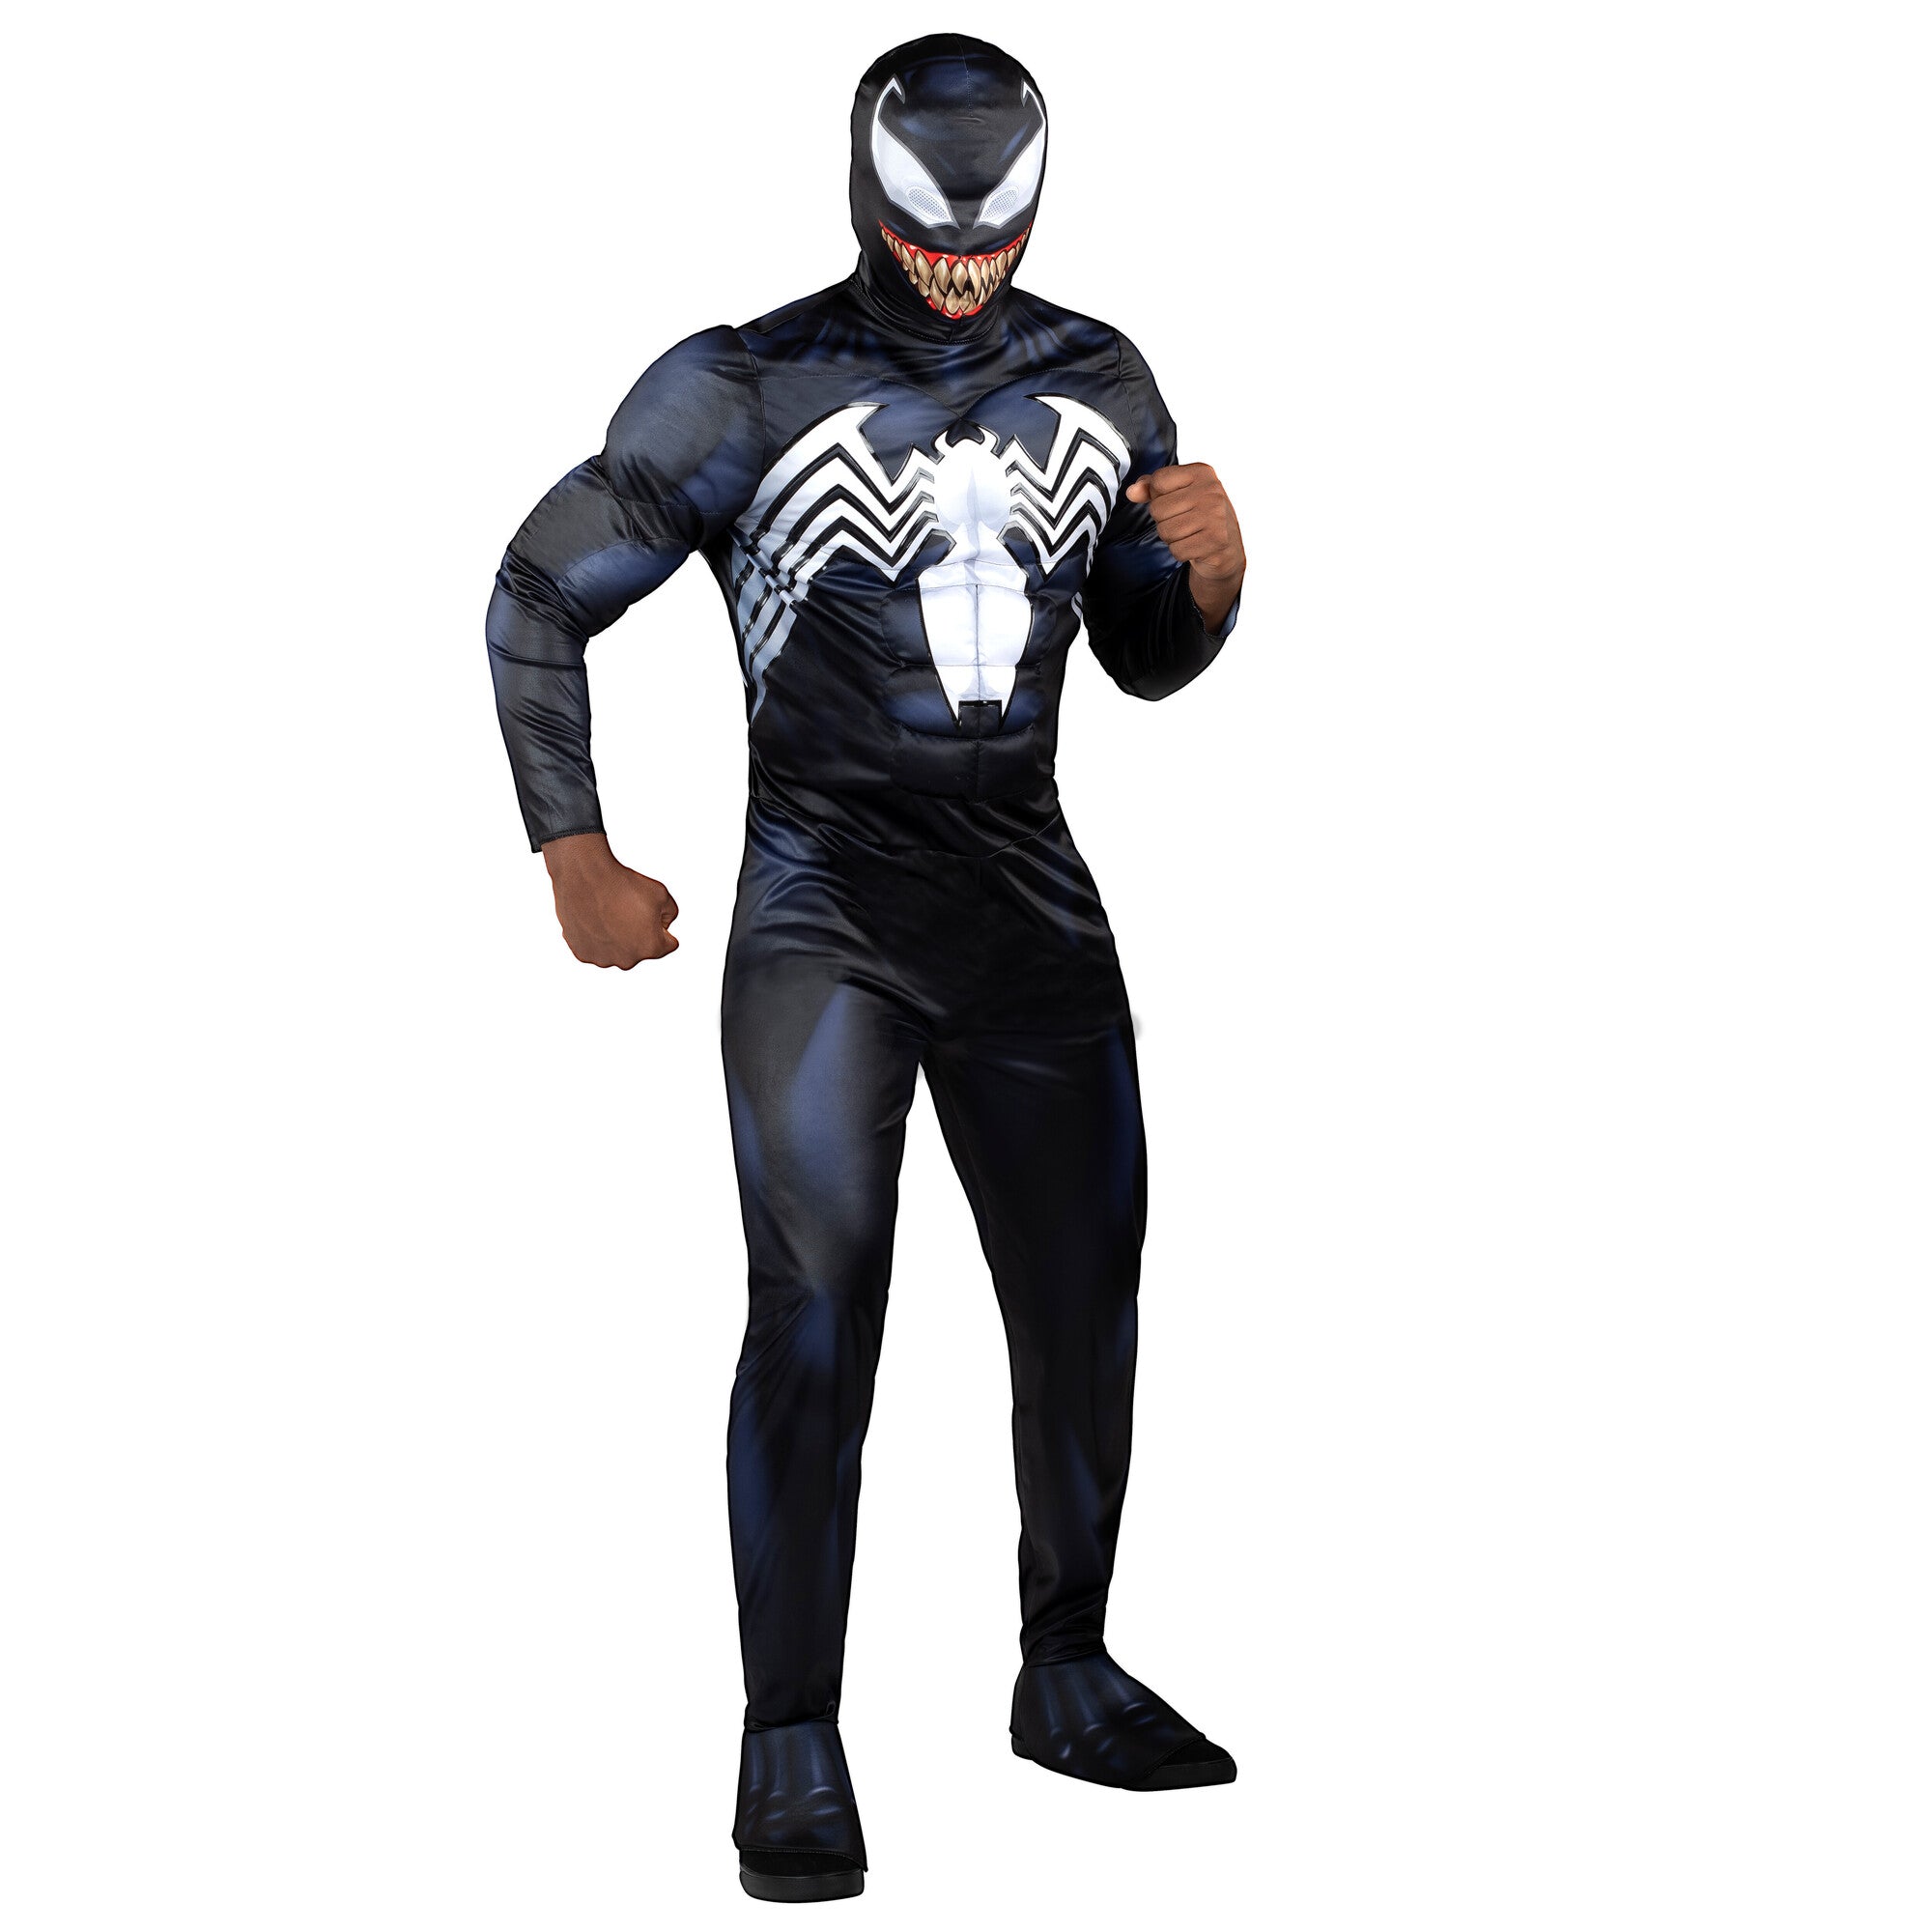 Marvel Venom Qualux Costume for Adults, Black Jumpsuit